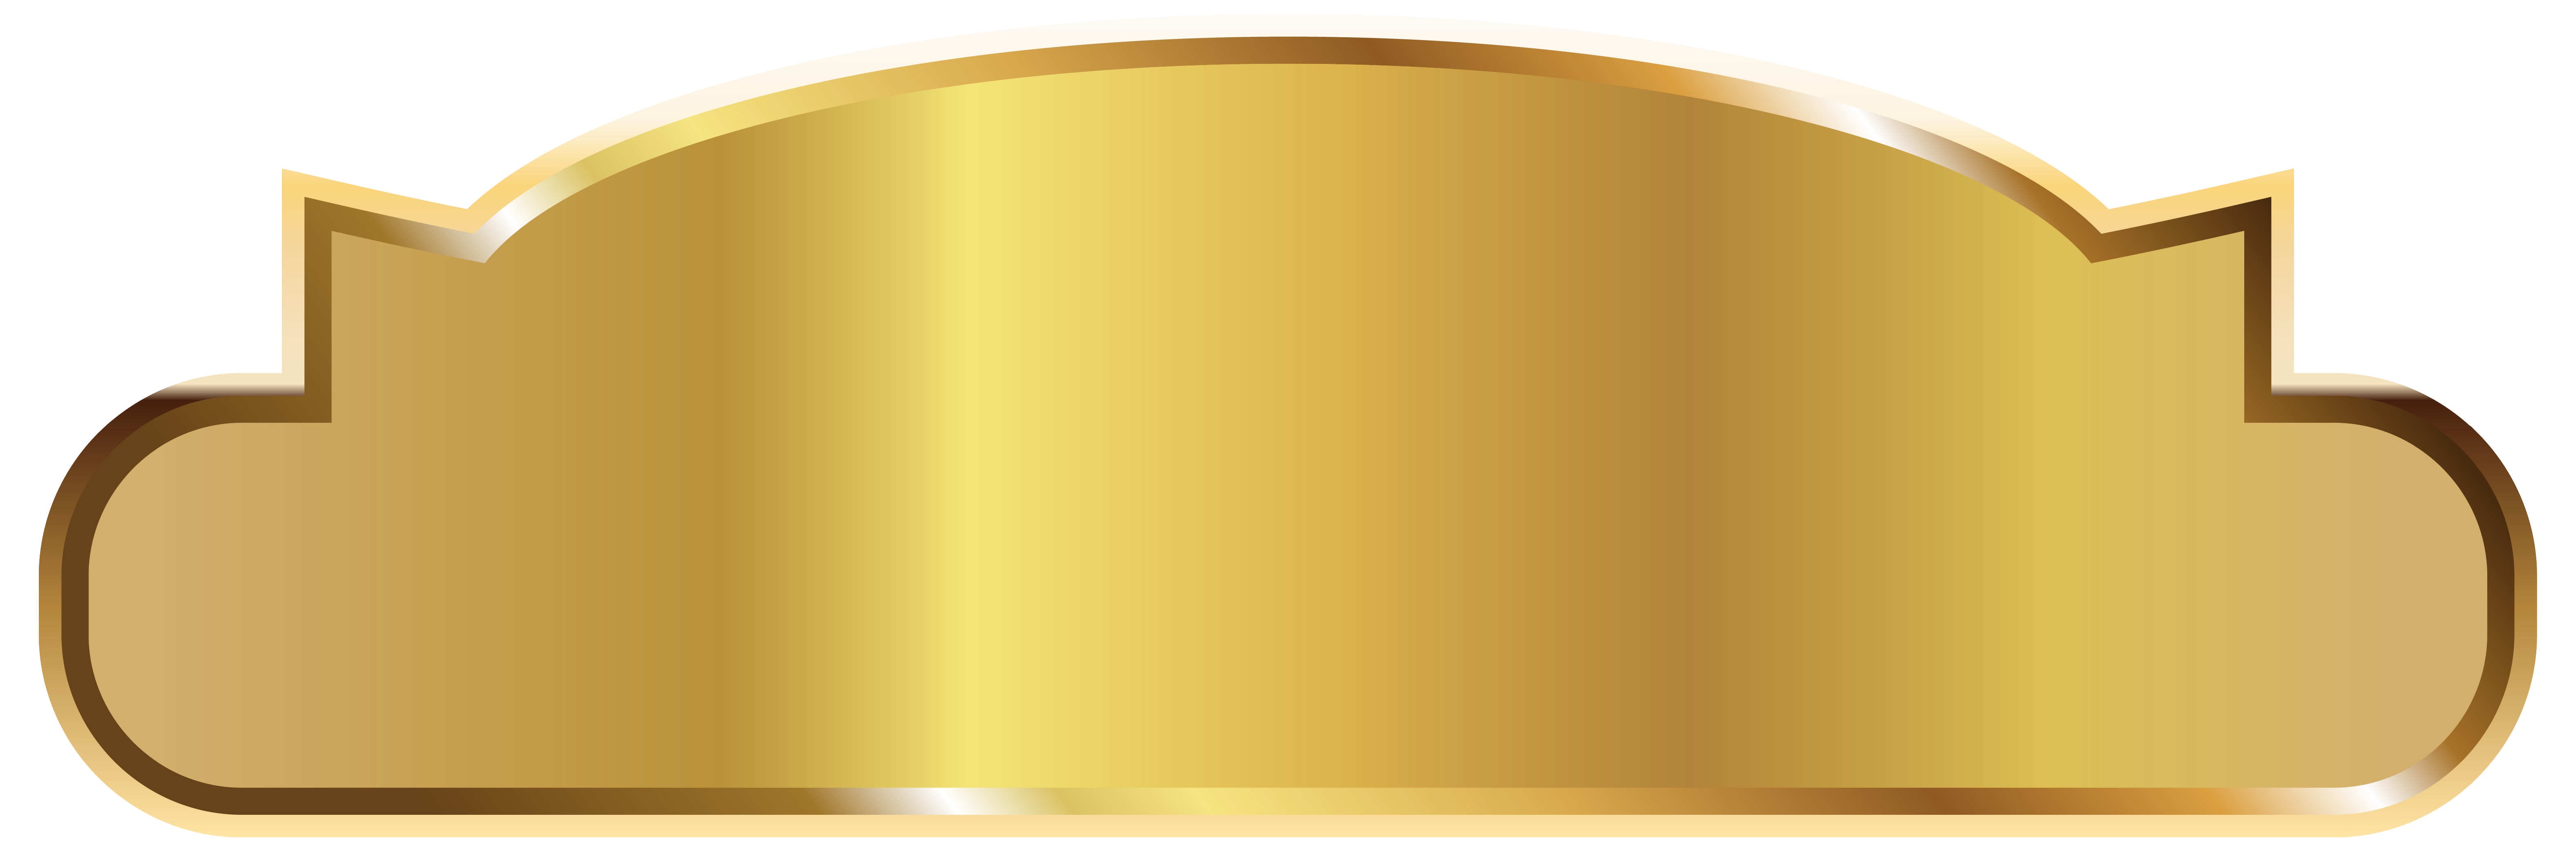 Gold PNG Transparent Image